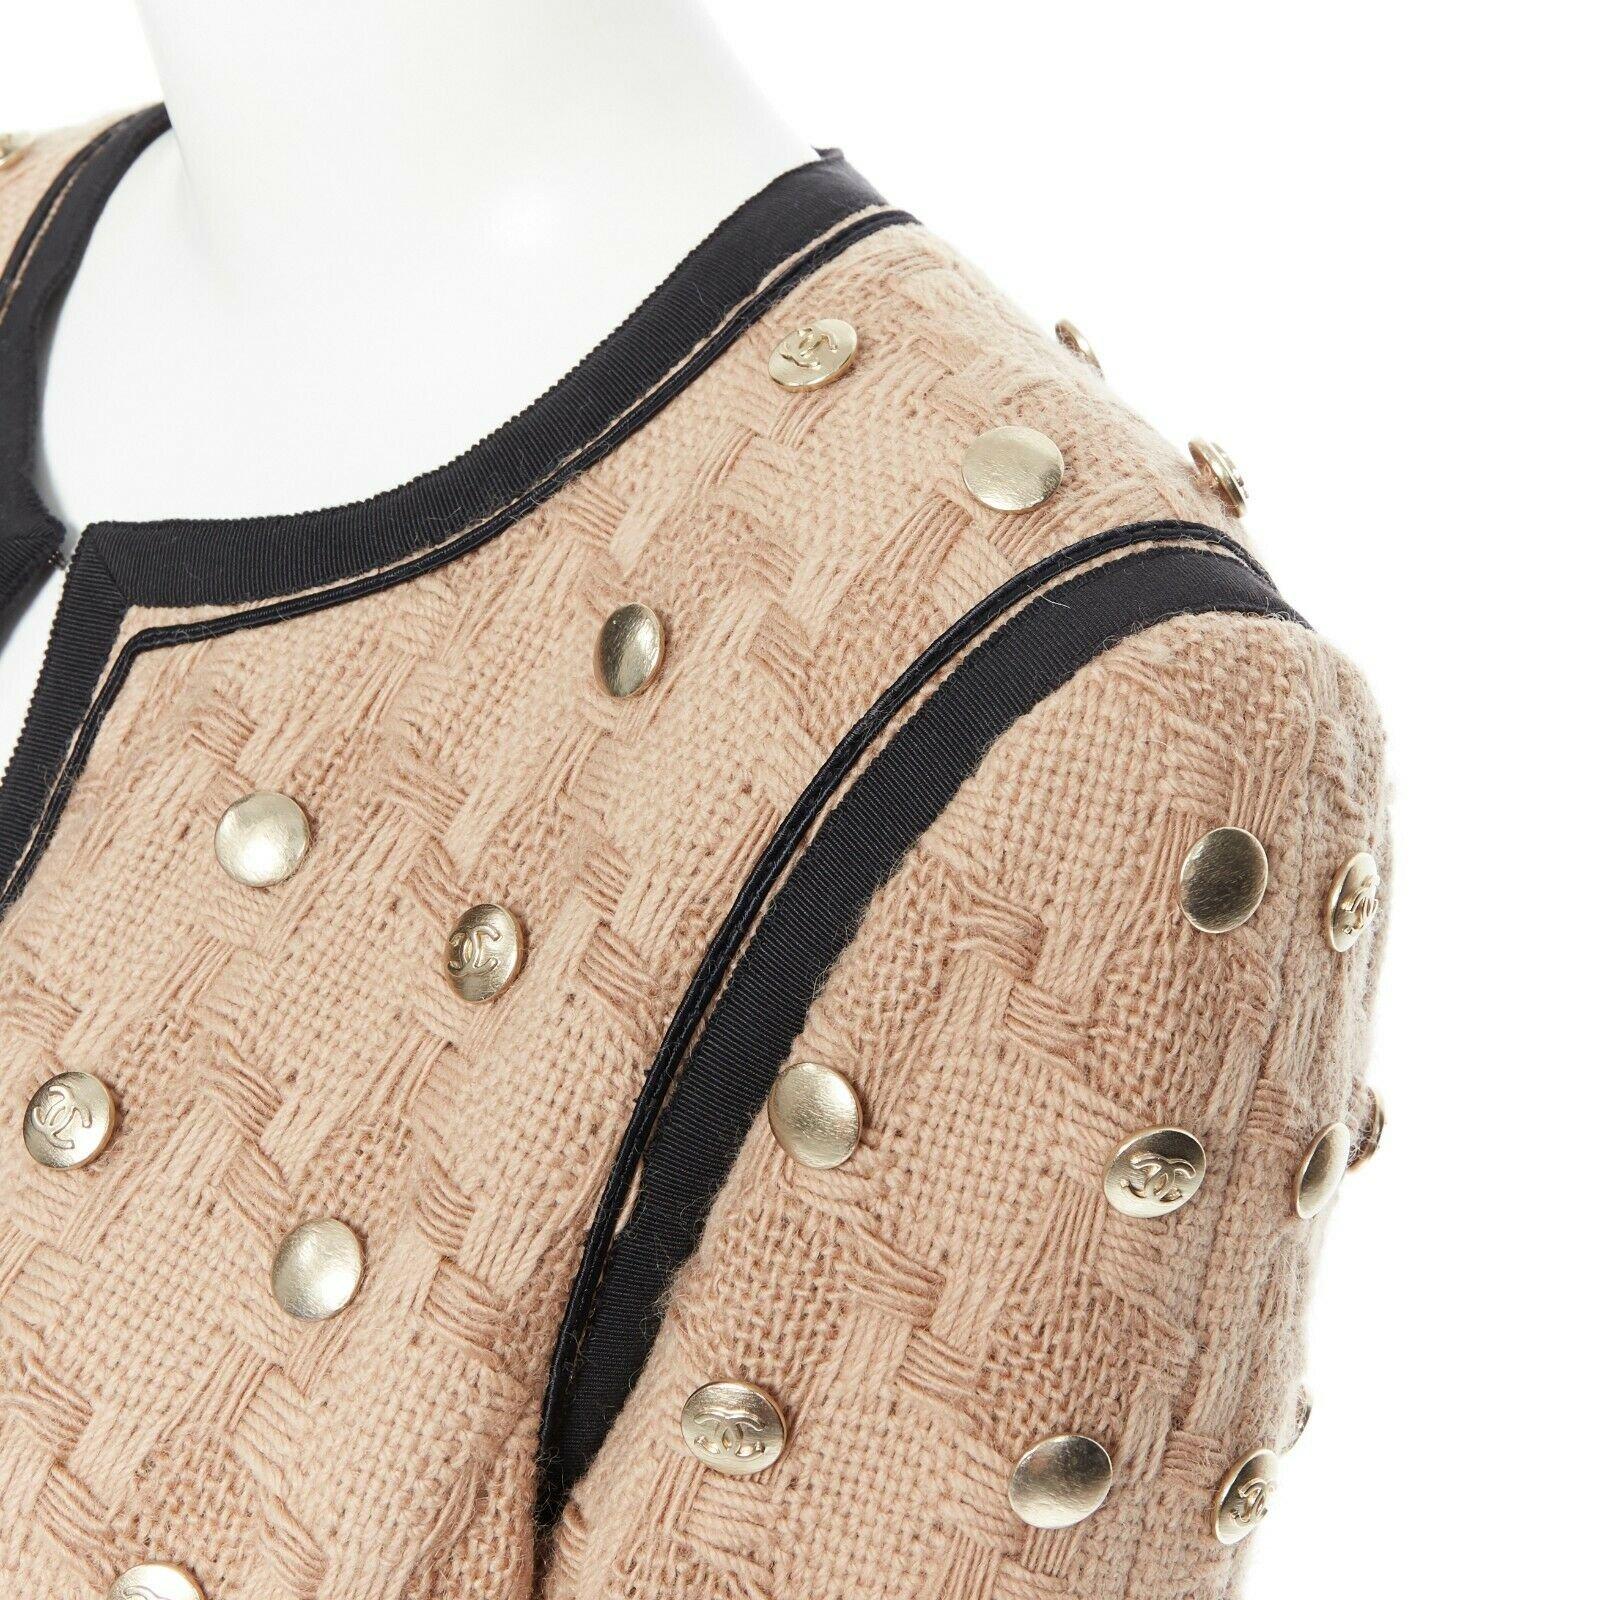 CHANEL 08A sand beige wool weave basket knit gold button embellish jacket FR44 Reference: ZING/A00100 
Brand: Chanel 
Designer: Karl Lagerfeld 
Collection: 08A 
Material: Wool 
Color: Beige 
Pattern: Solid 
Extra Detail: Basket weaved knit jacket.